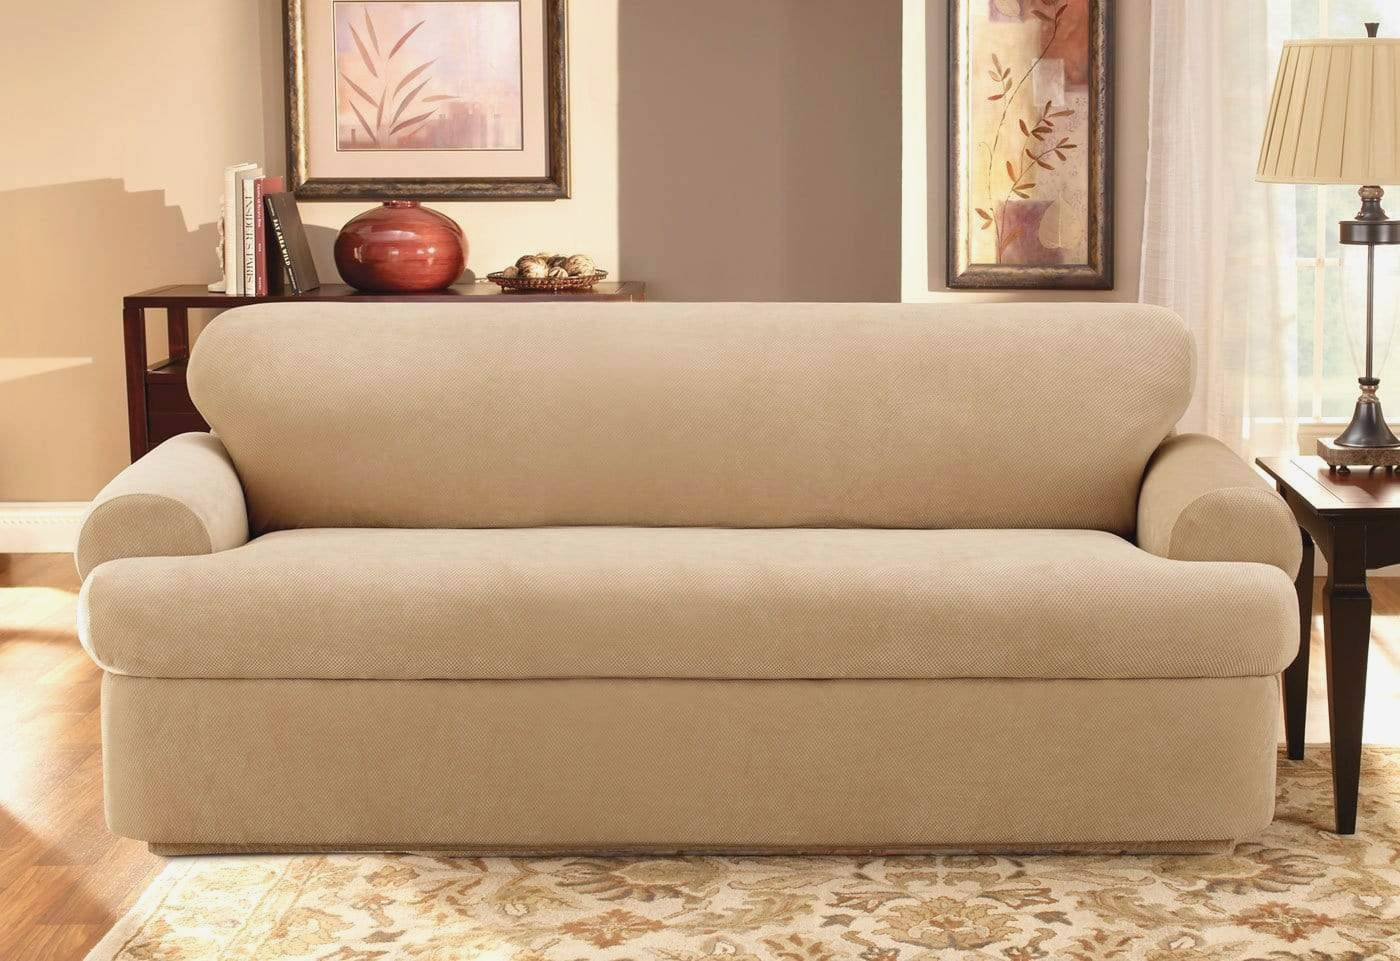 Stretch Pique Three Piece Fullsize Sleeper Sofa Slipcover 60 • Patio Ideas